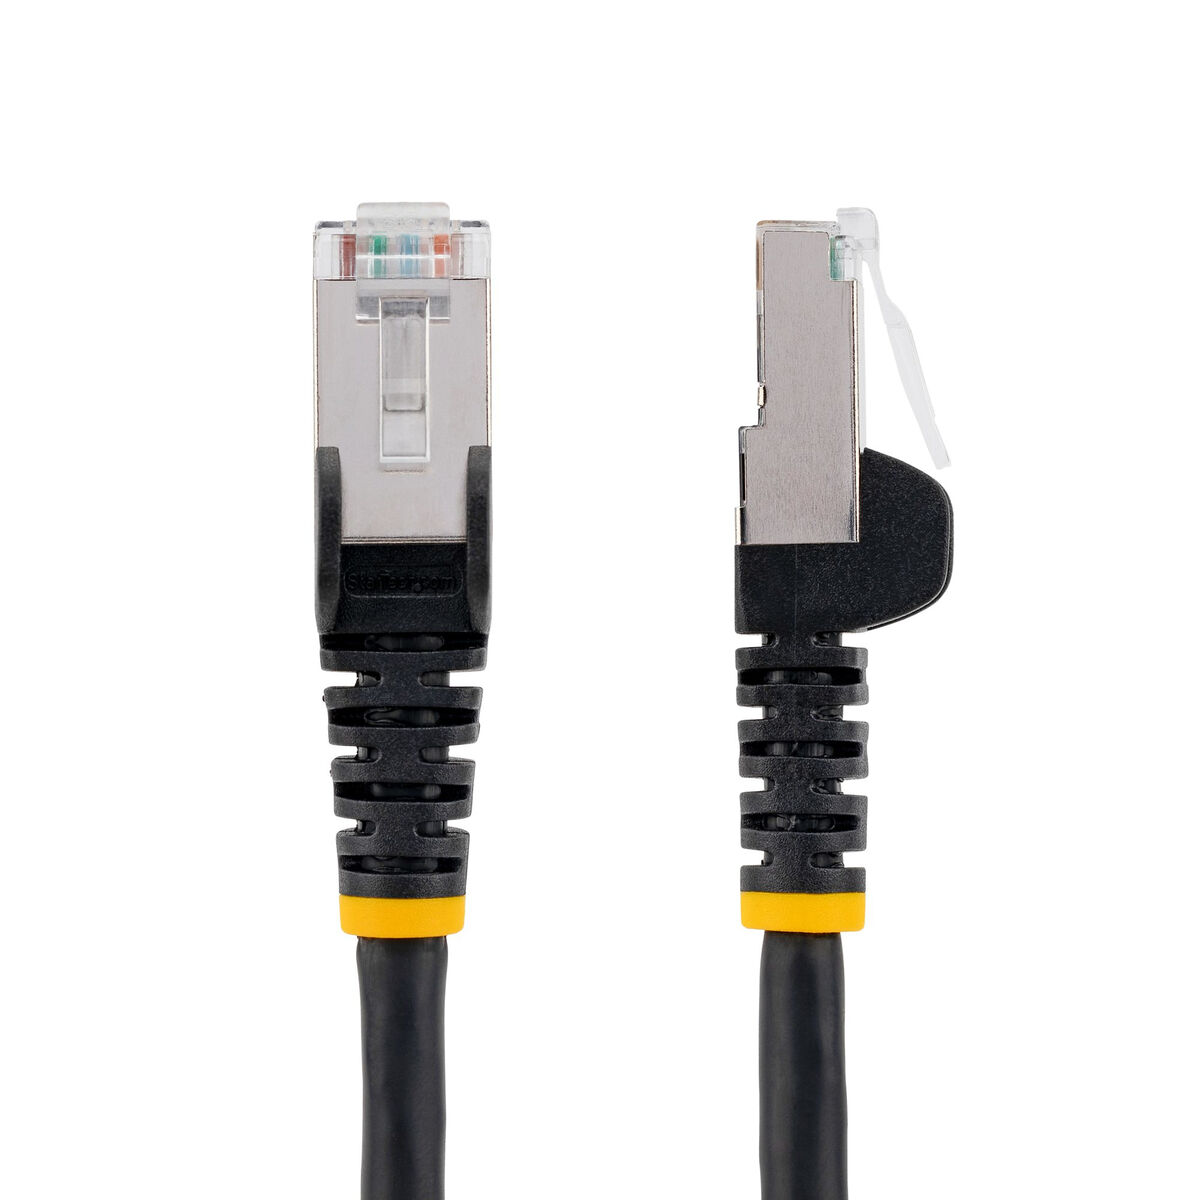 UTP Category 6 Rigid Network Cable Startech NLBK-1M-CAT6A-PATCH